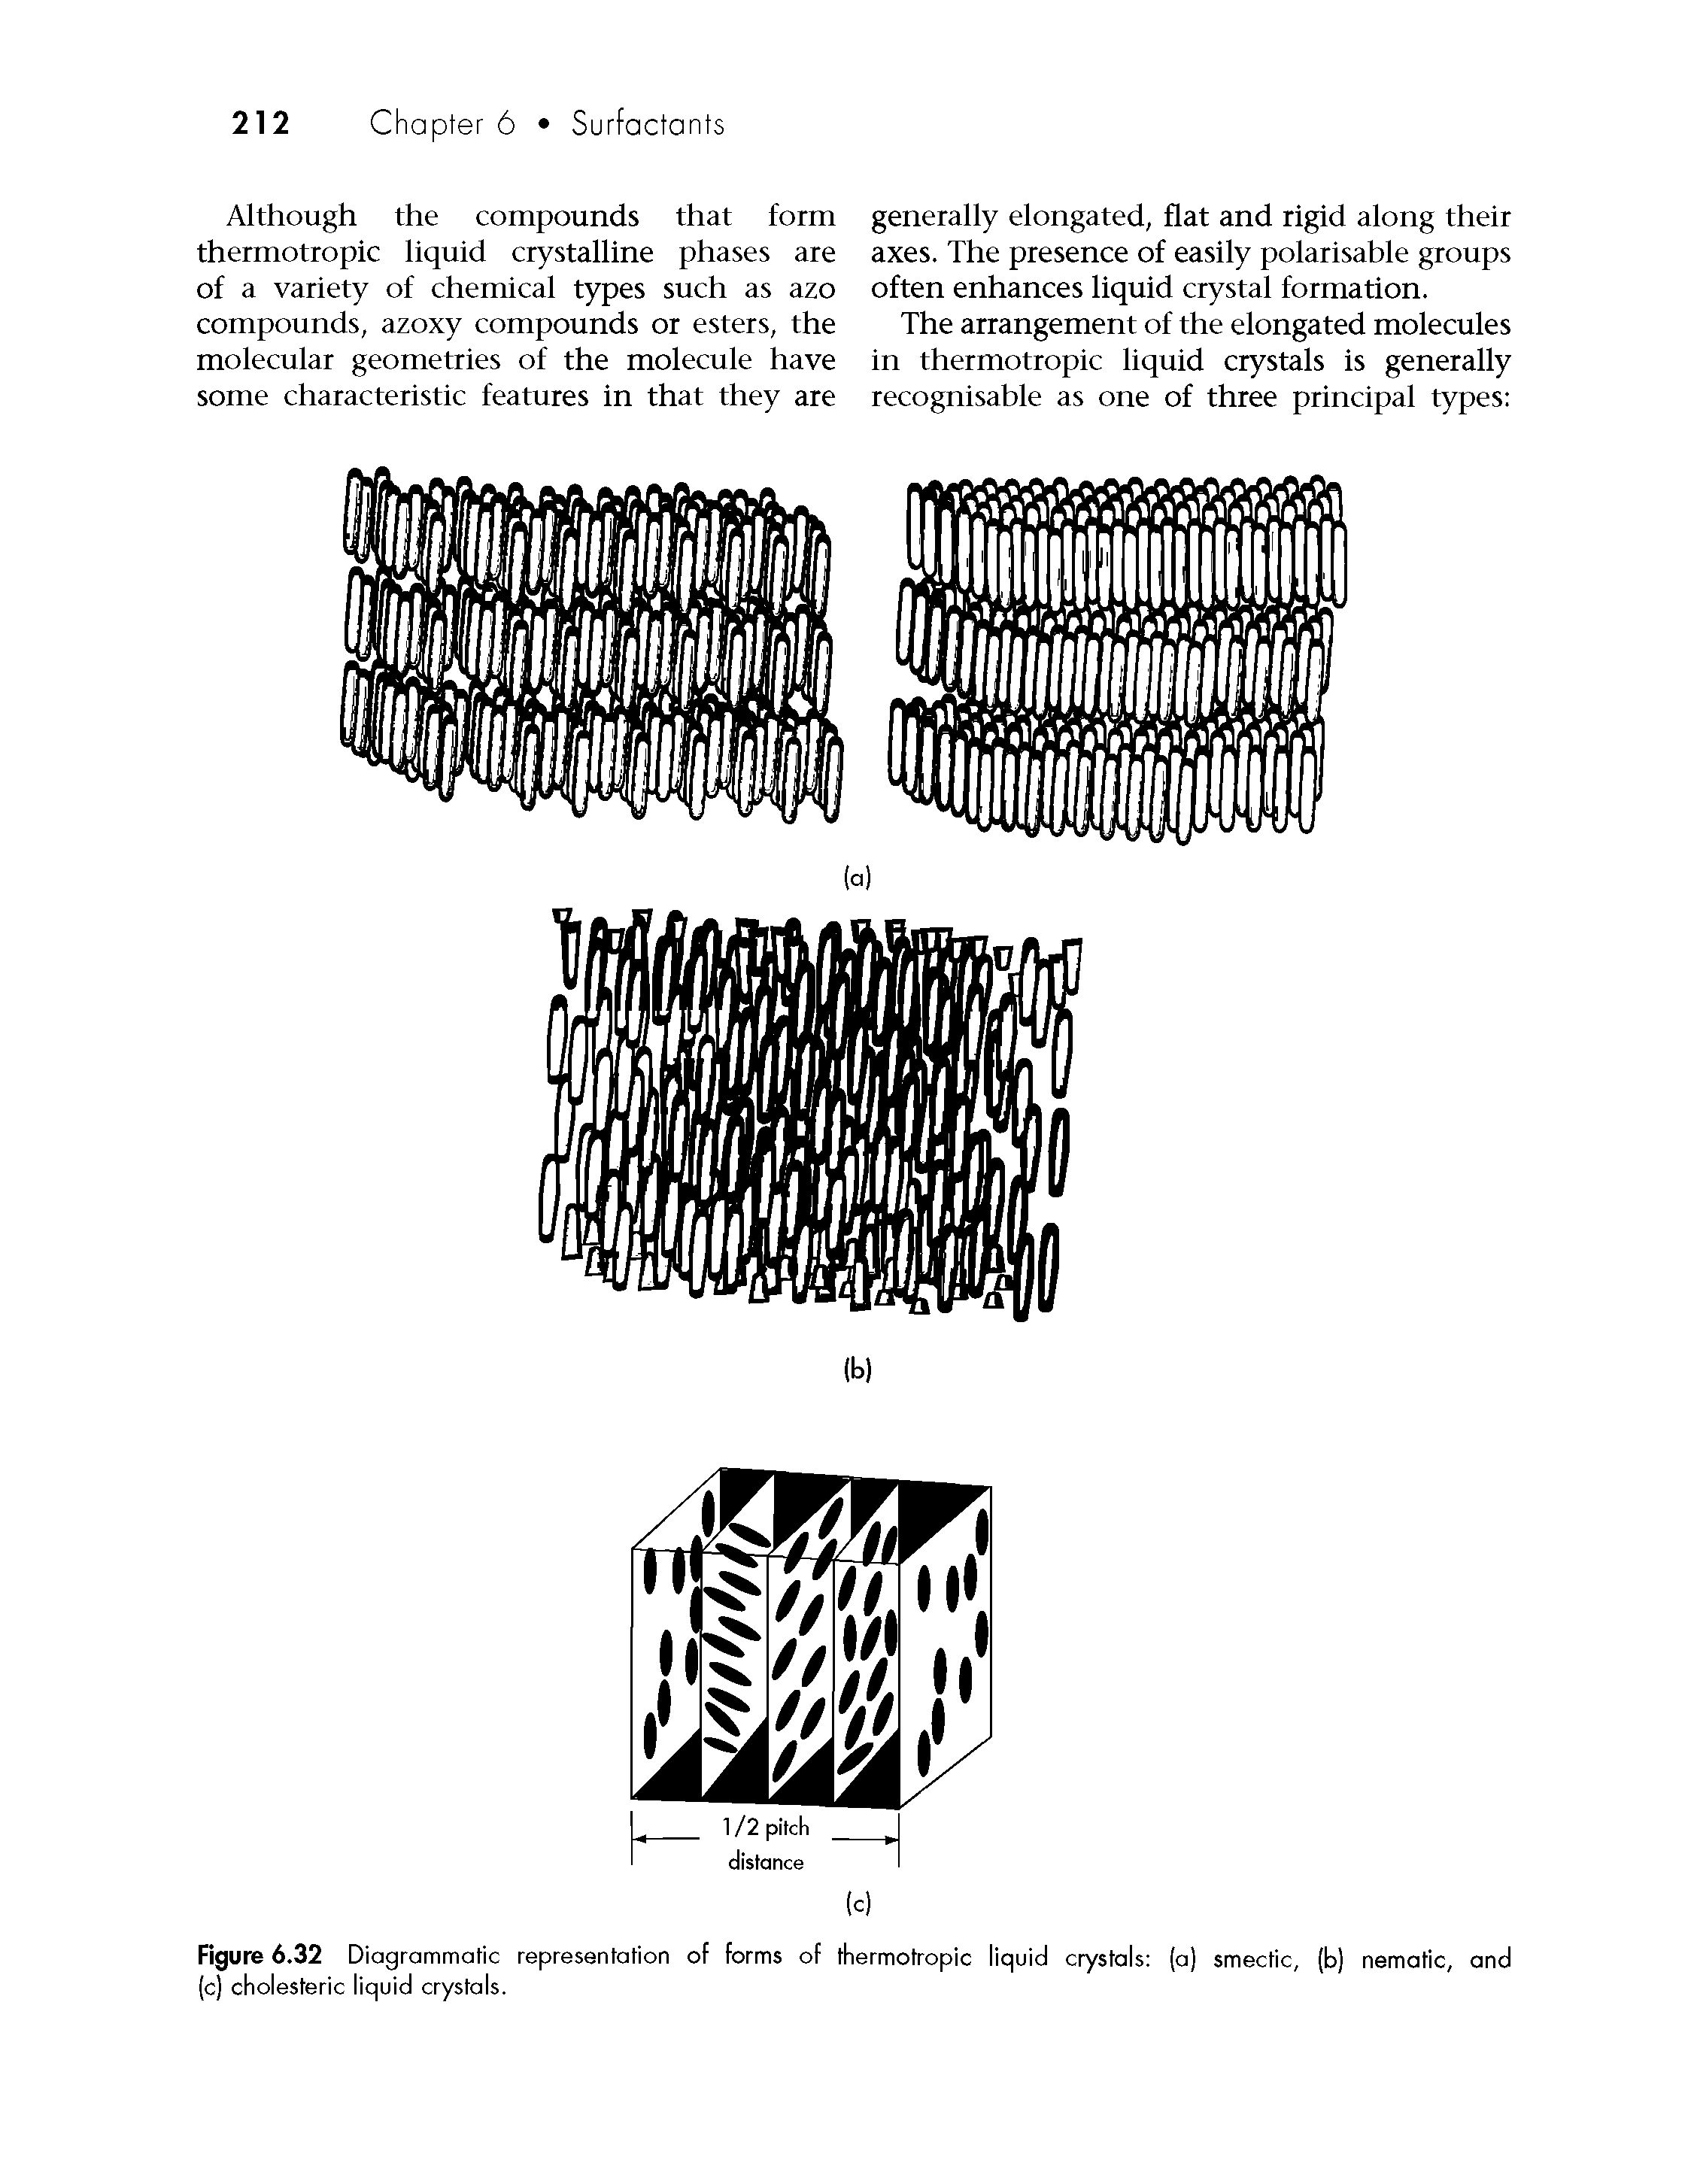 Figure 6.32 Diagrammatic representation of forms of thermotropic liquid crystals (a) smectic, (b) nematic, and (c) cholesteric liquid crystals.